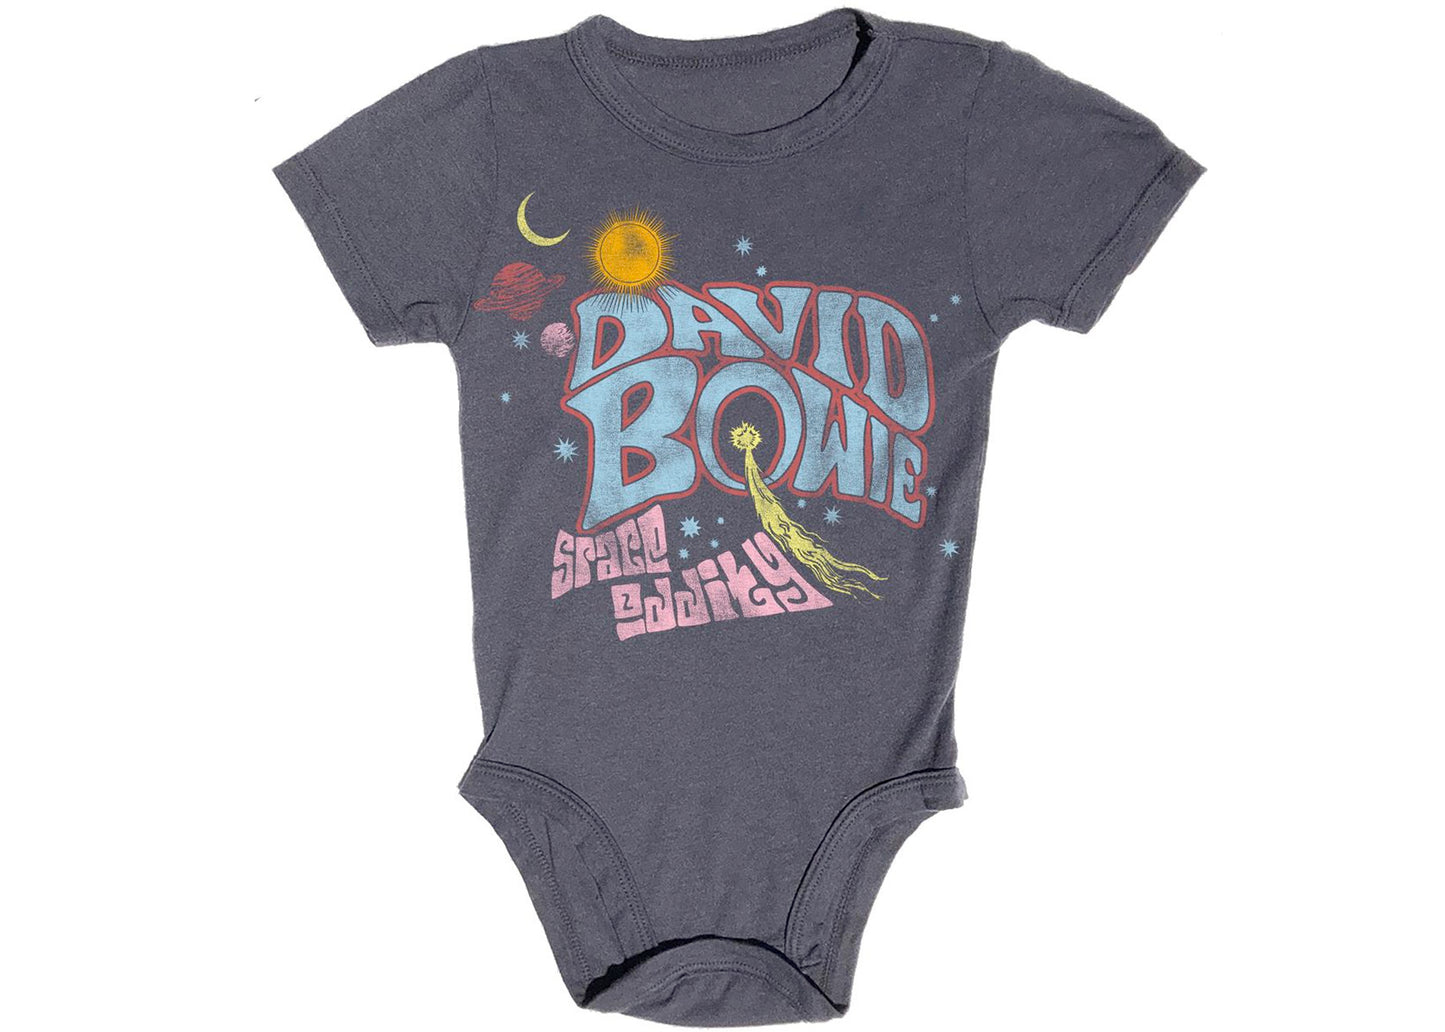 David Bowie Space Oddity Baby Onesie